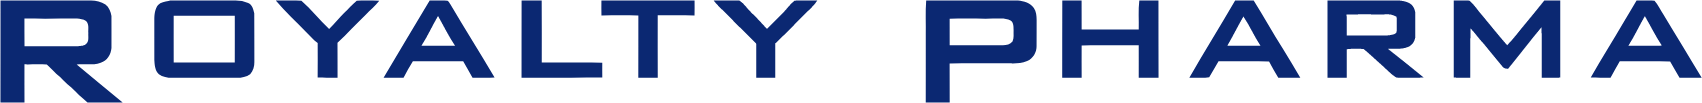 Royalty Pharma logo large (transparent PNG)